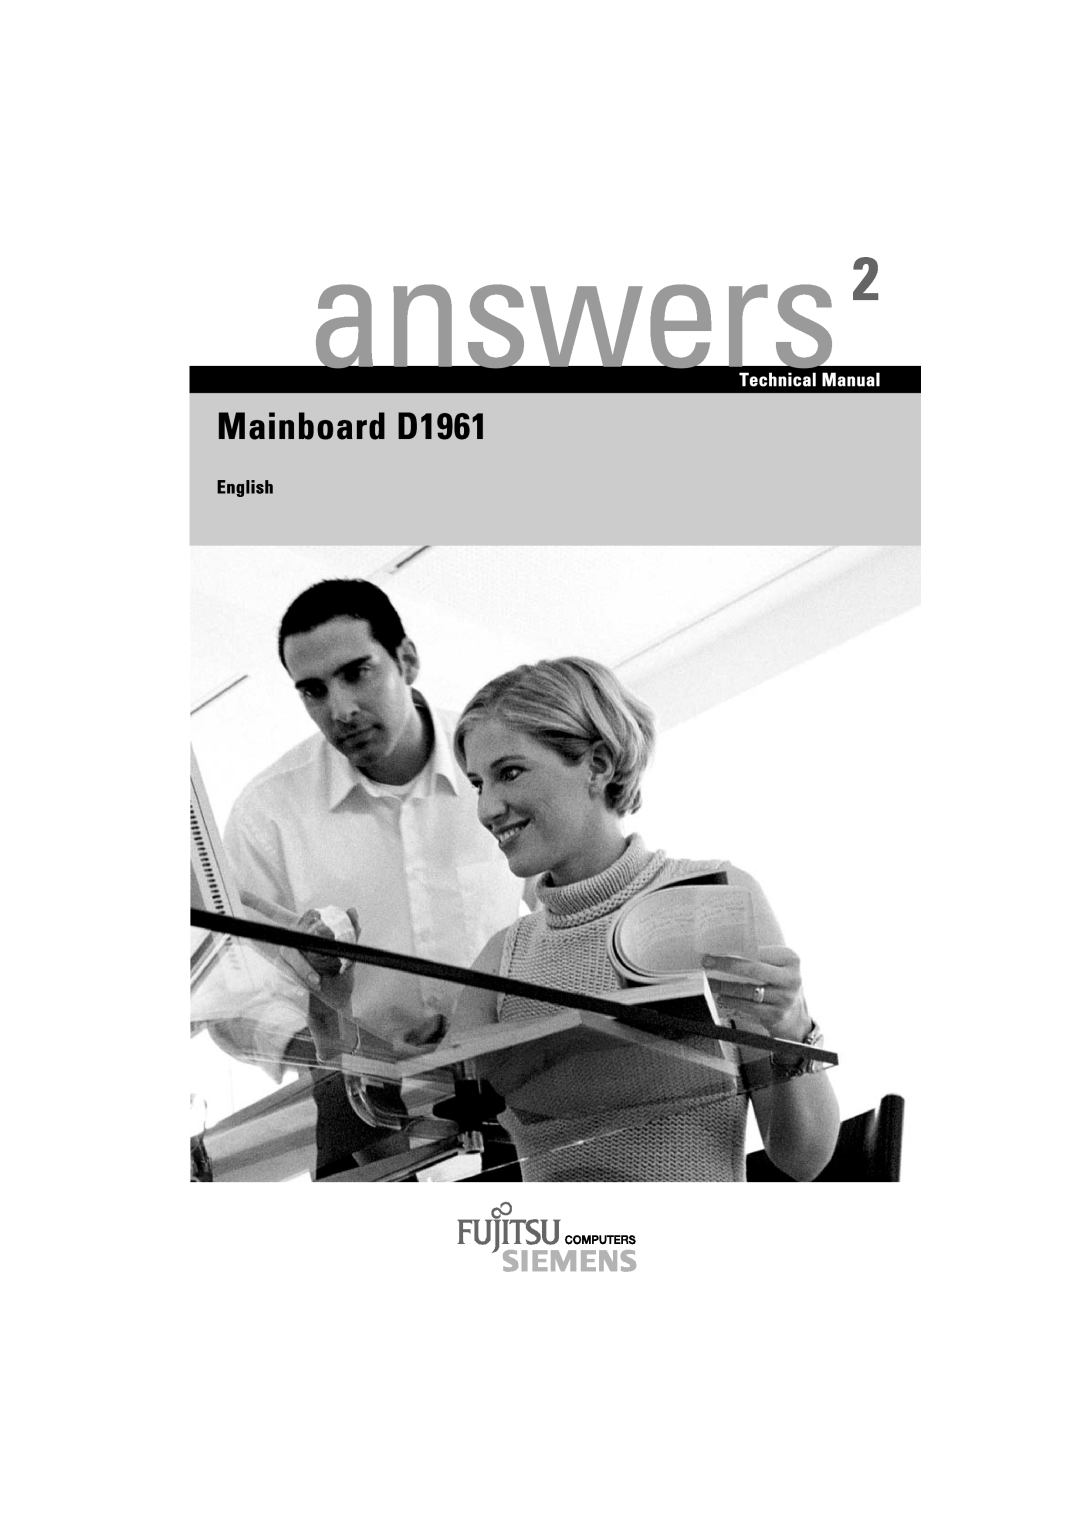 Fujitsu technical manual answers, Mainboard D1961, Technical Manual 